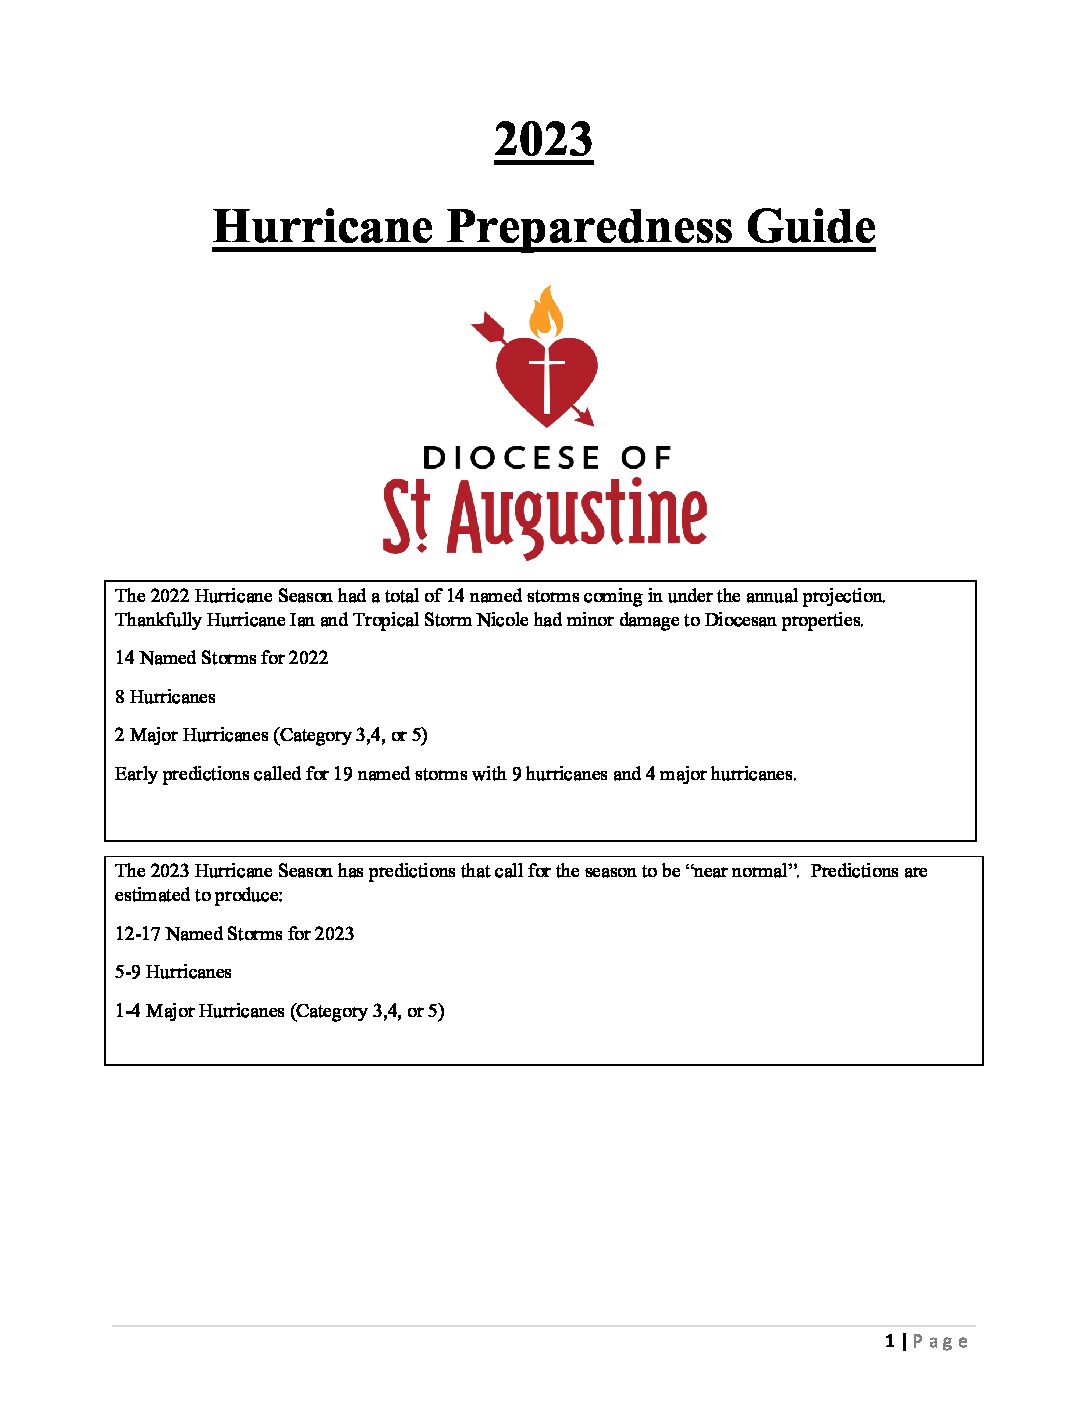 Hurricane Preparedness Guide 2023 Fiscal Office Fiscal Office